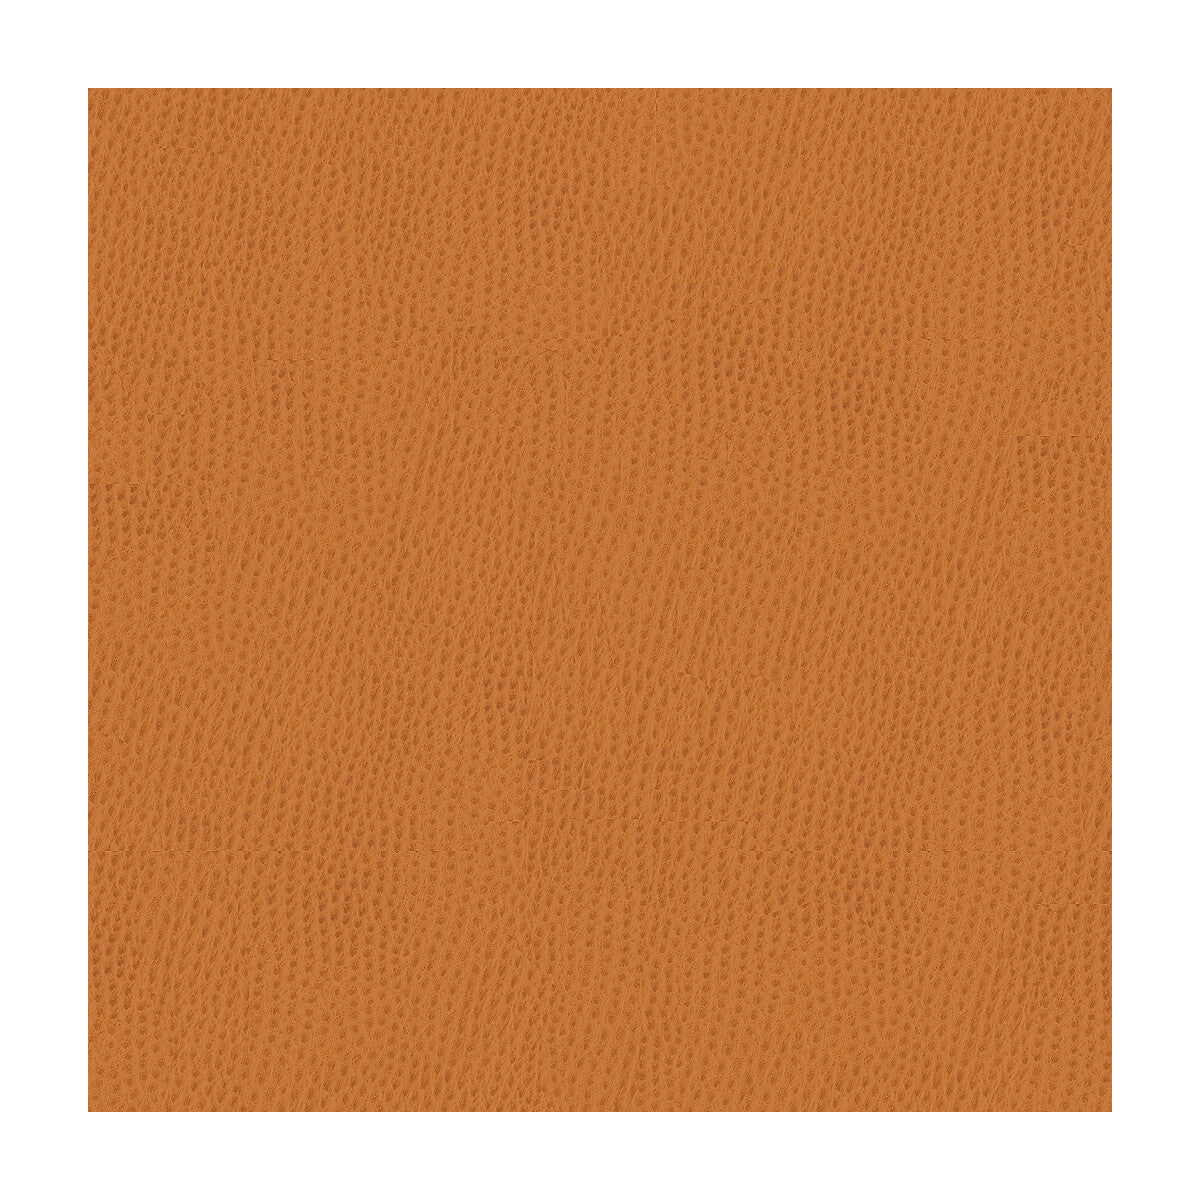 Kravet Contract fabric in belus-212 color - pattern BELUS.212.0 - by Kravet Contract